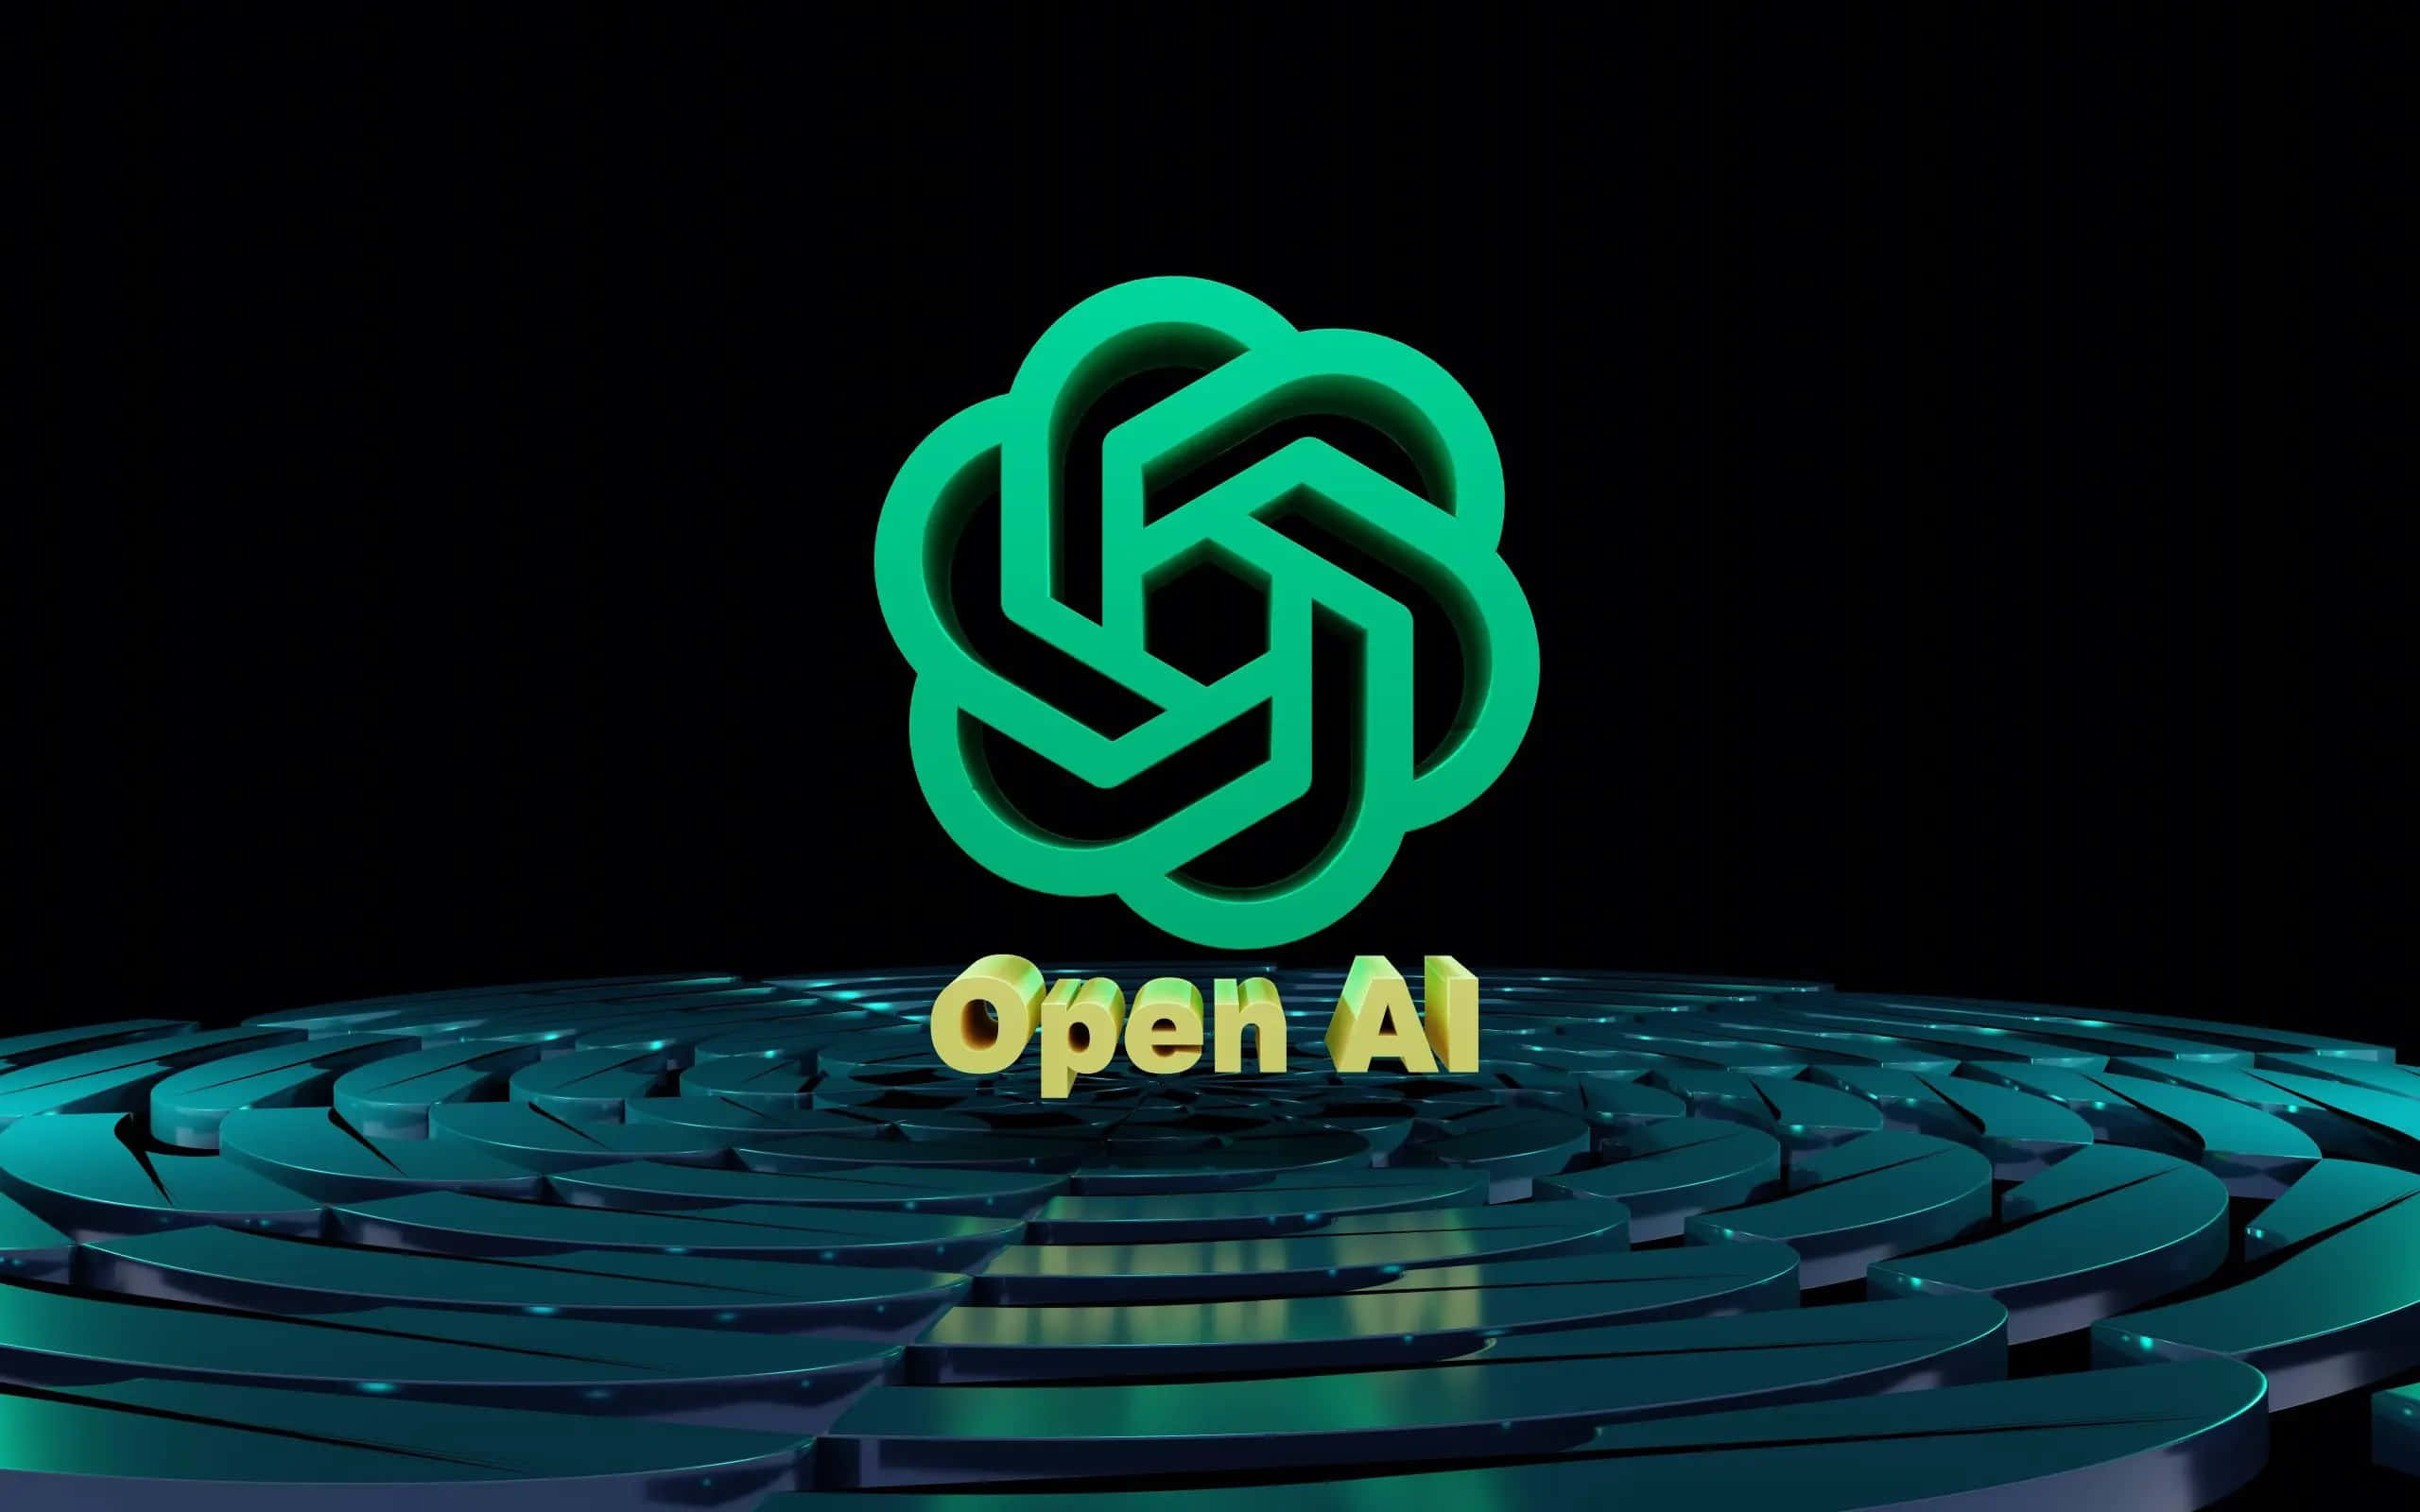 Open Ai Logo On A Black Background Wallpaper